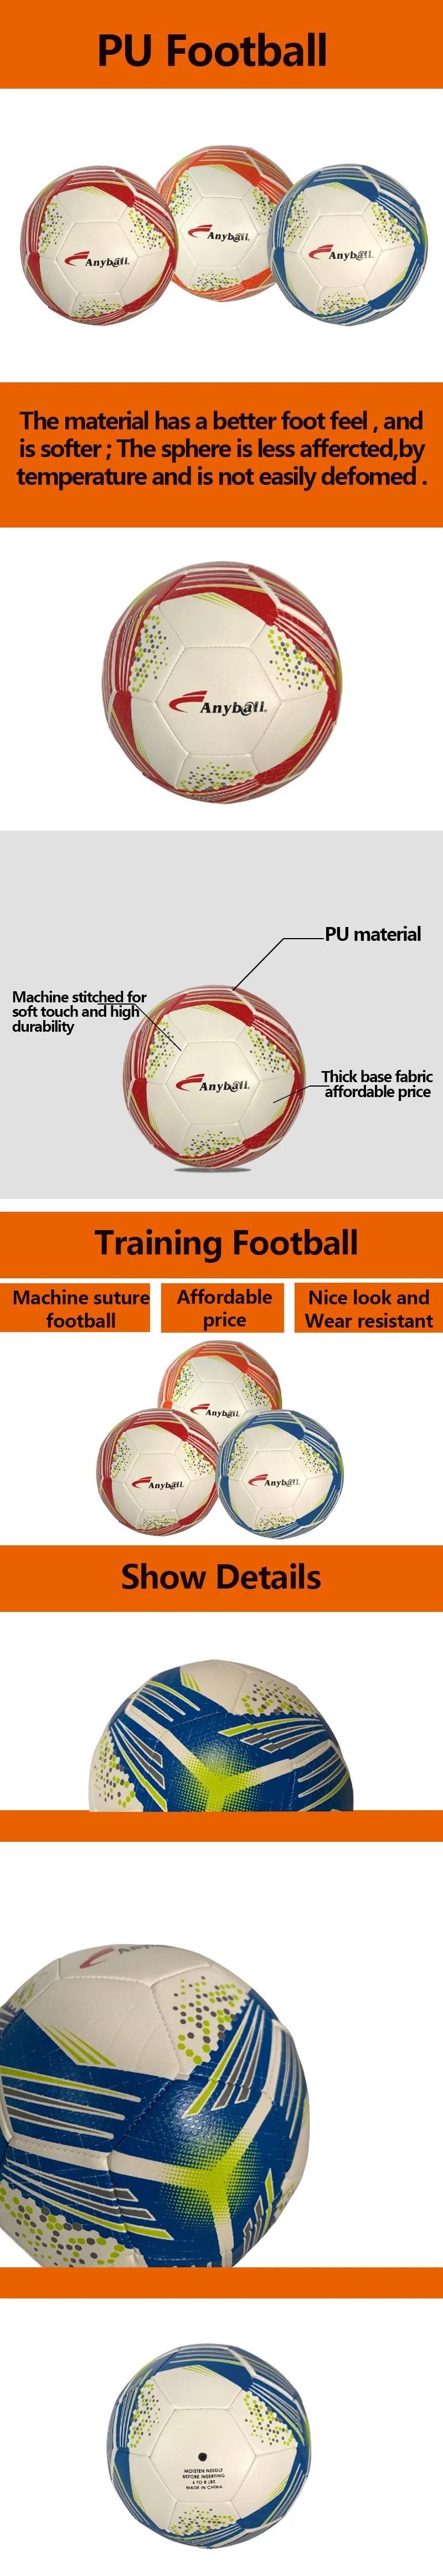 Anyball Football Training &amp; Match Soccer Pitch Ball Size 5 High Quality